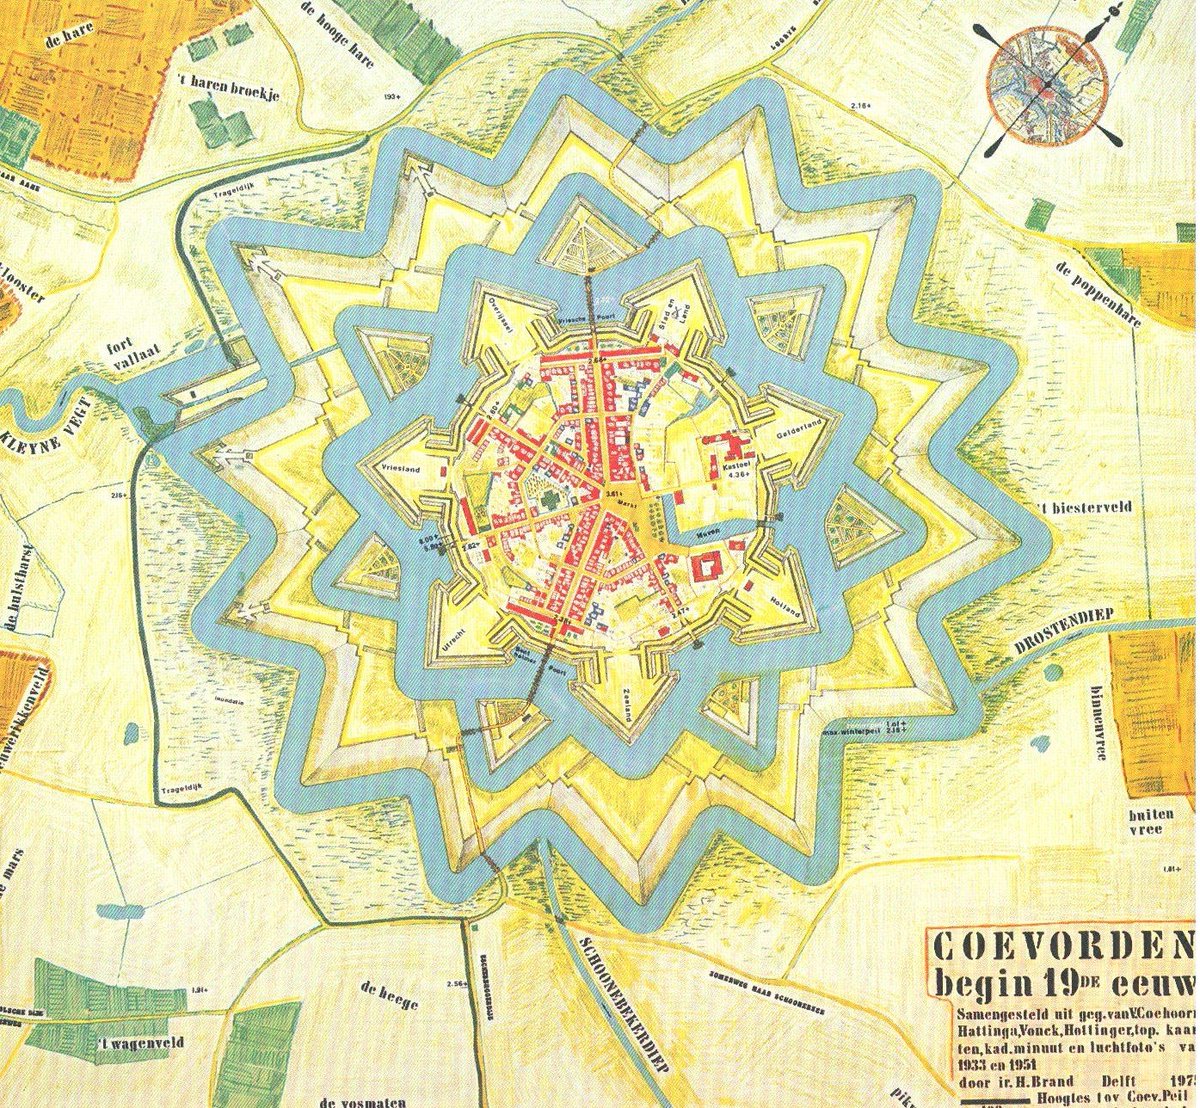 88. Coevorden, The Netherlands(1600's)